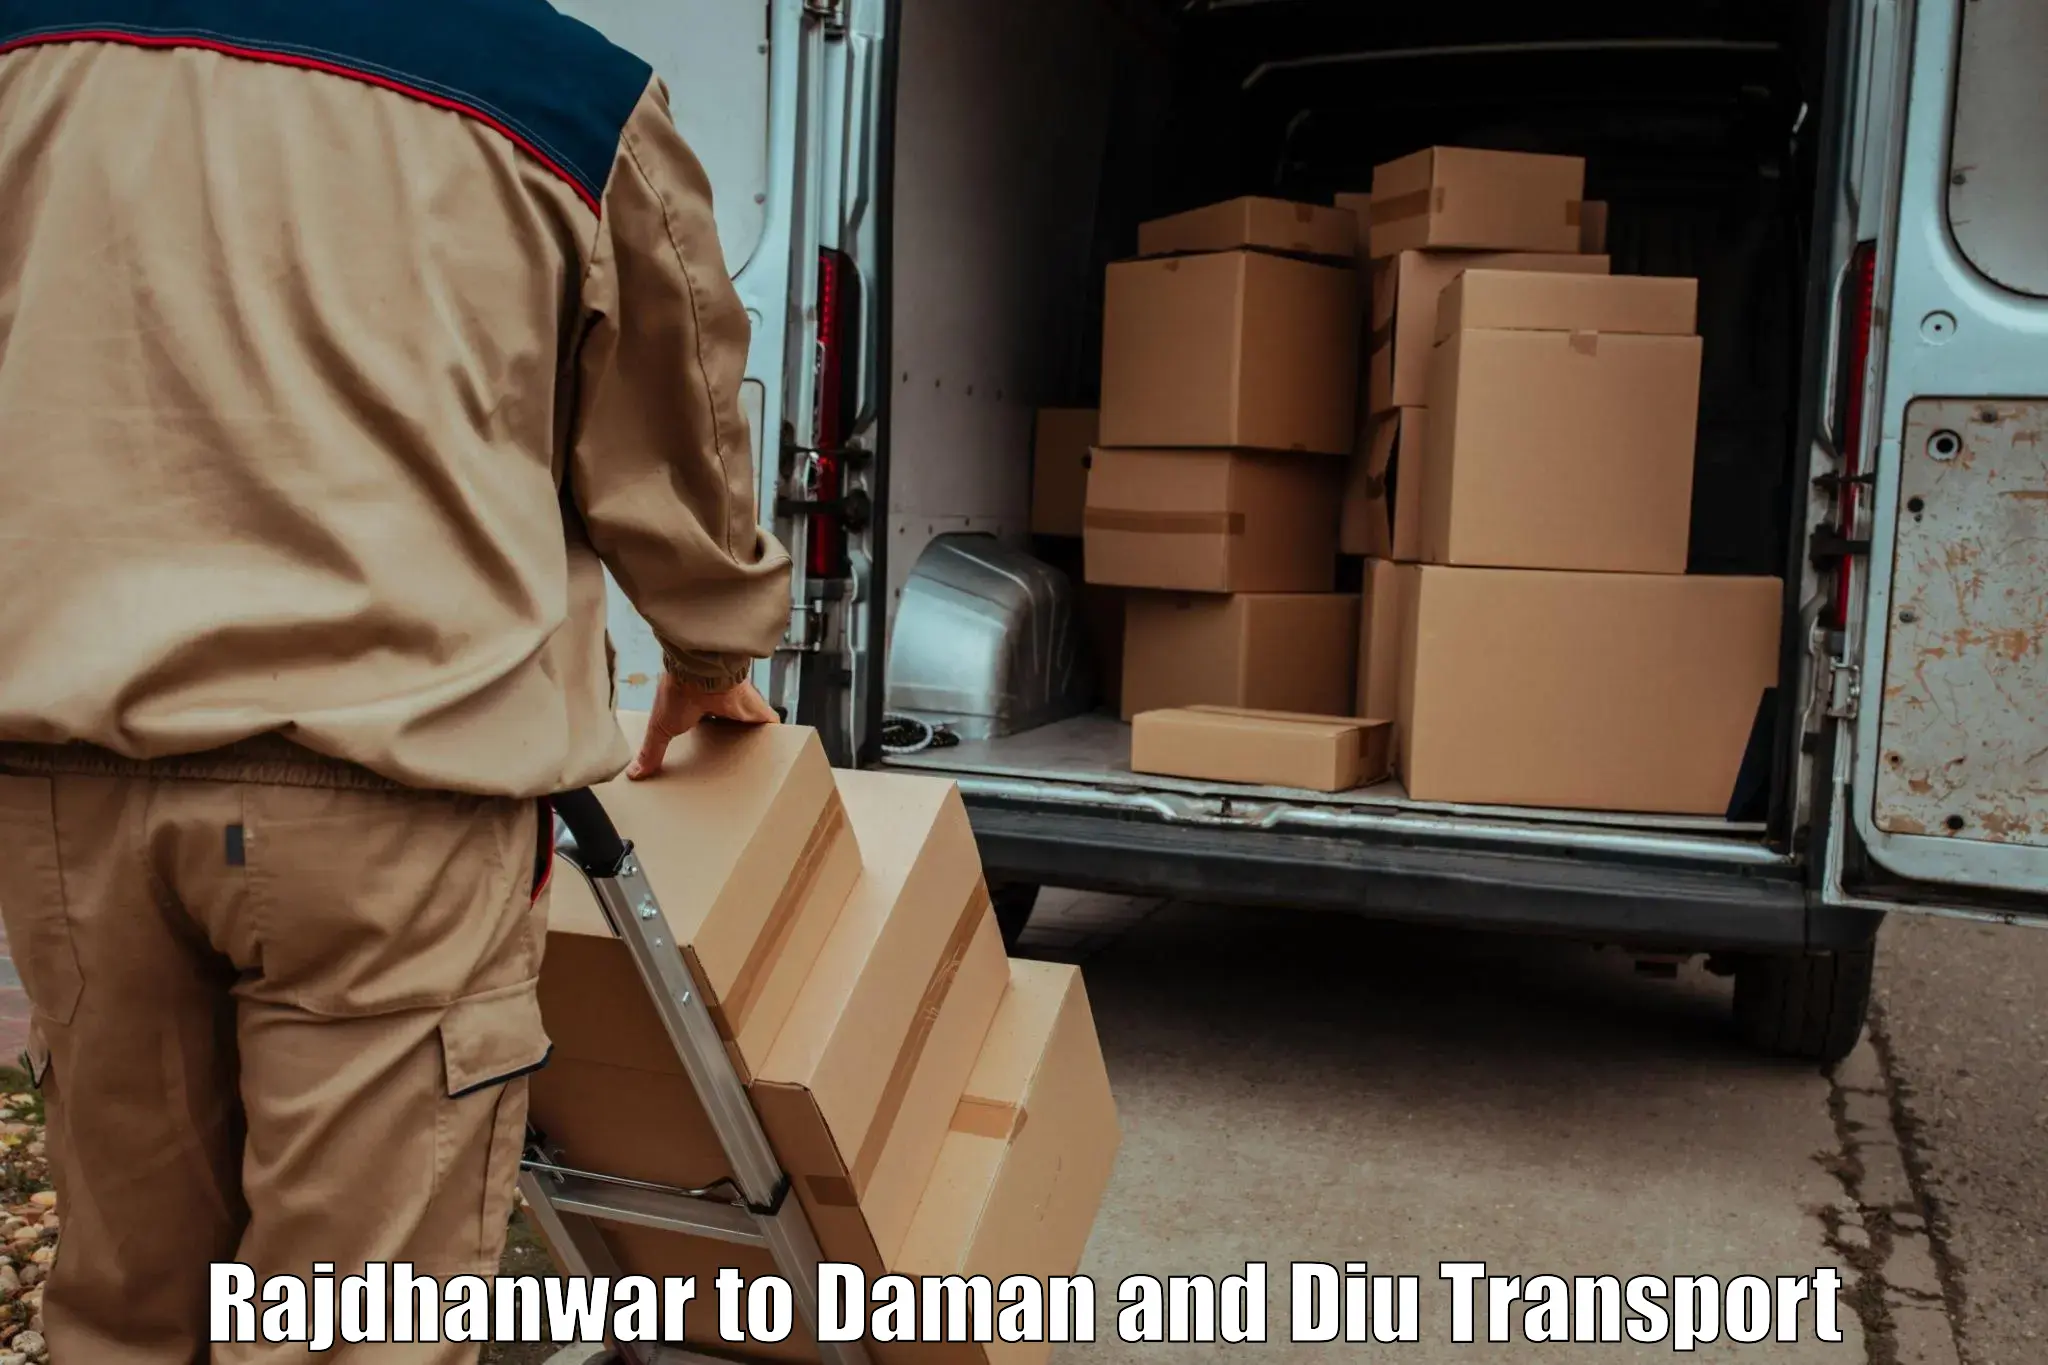 Transport in sharing Rajdhanwar to Daman and Diu